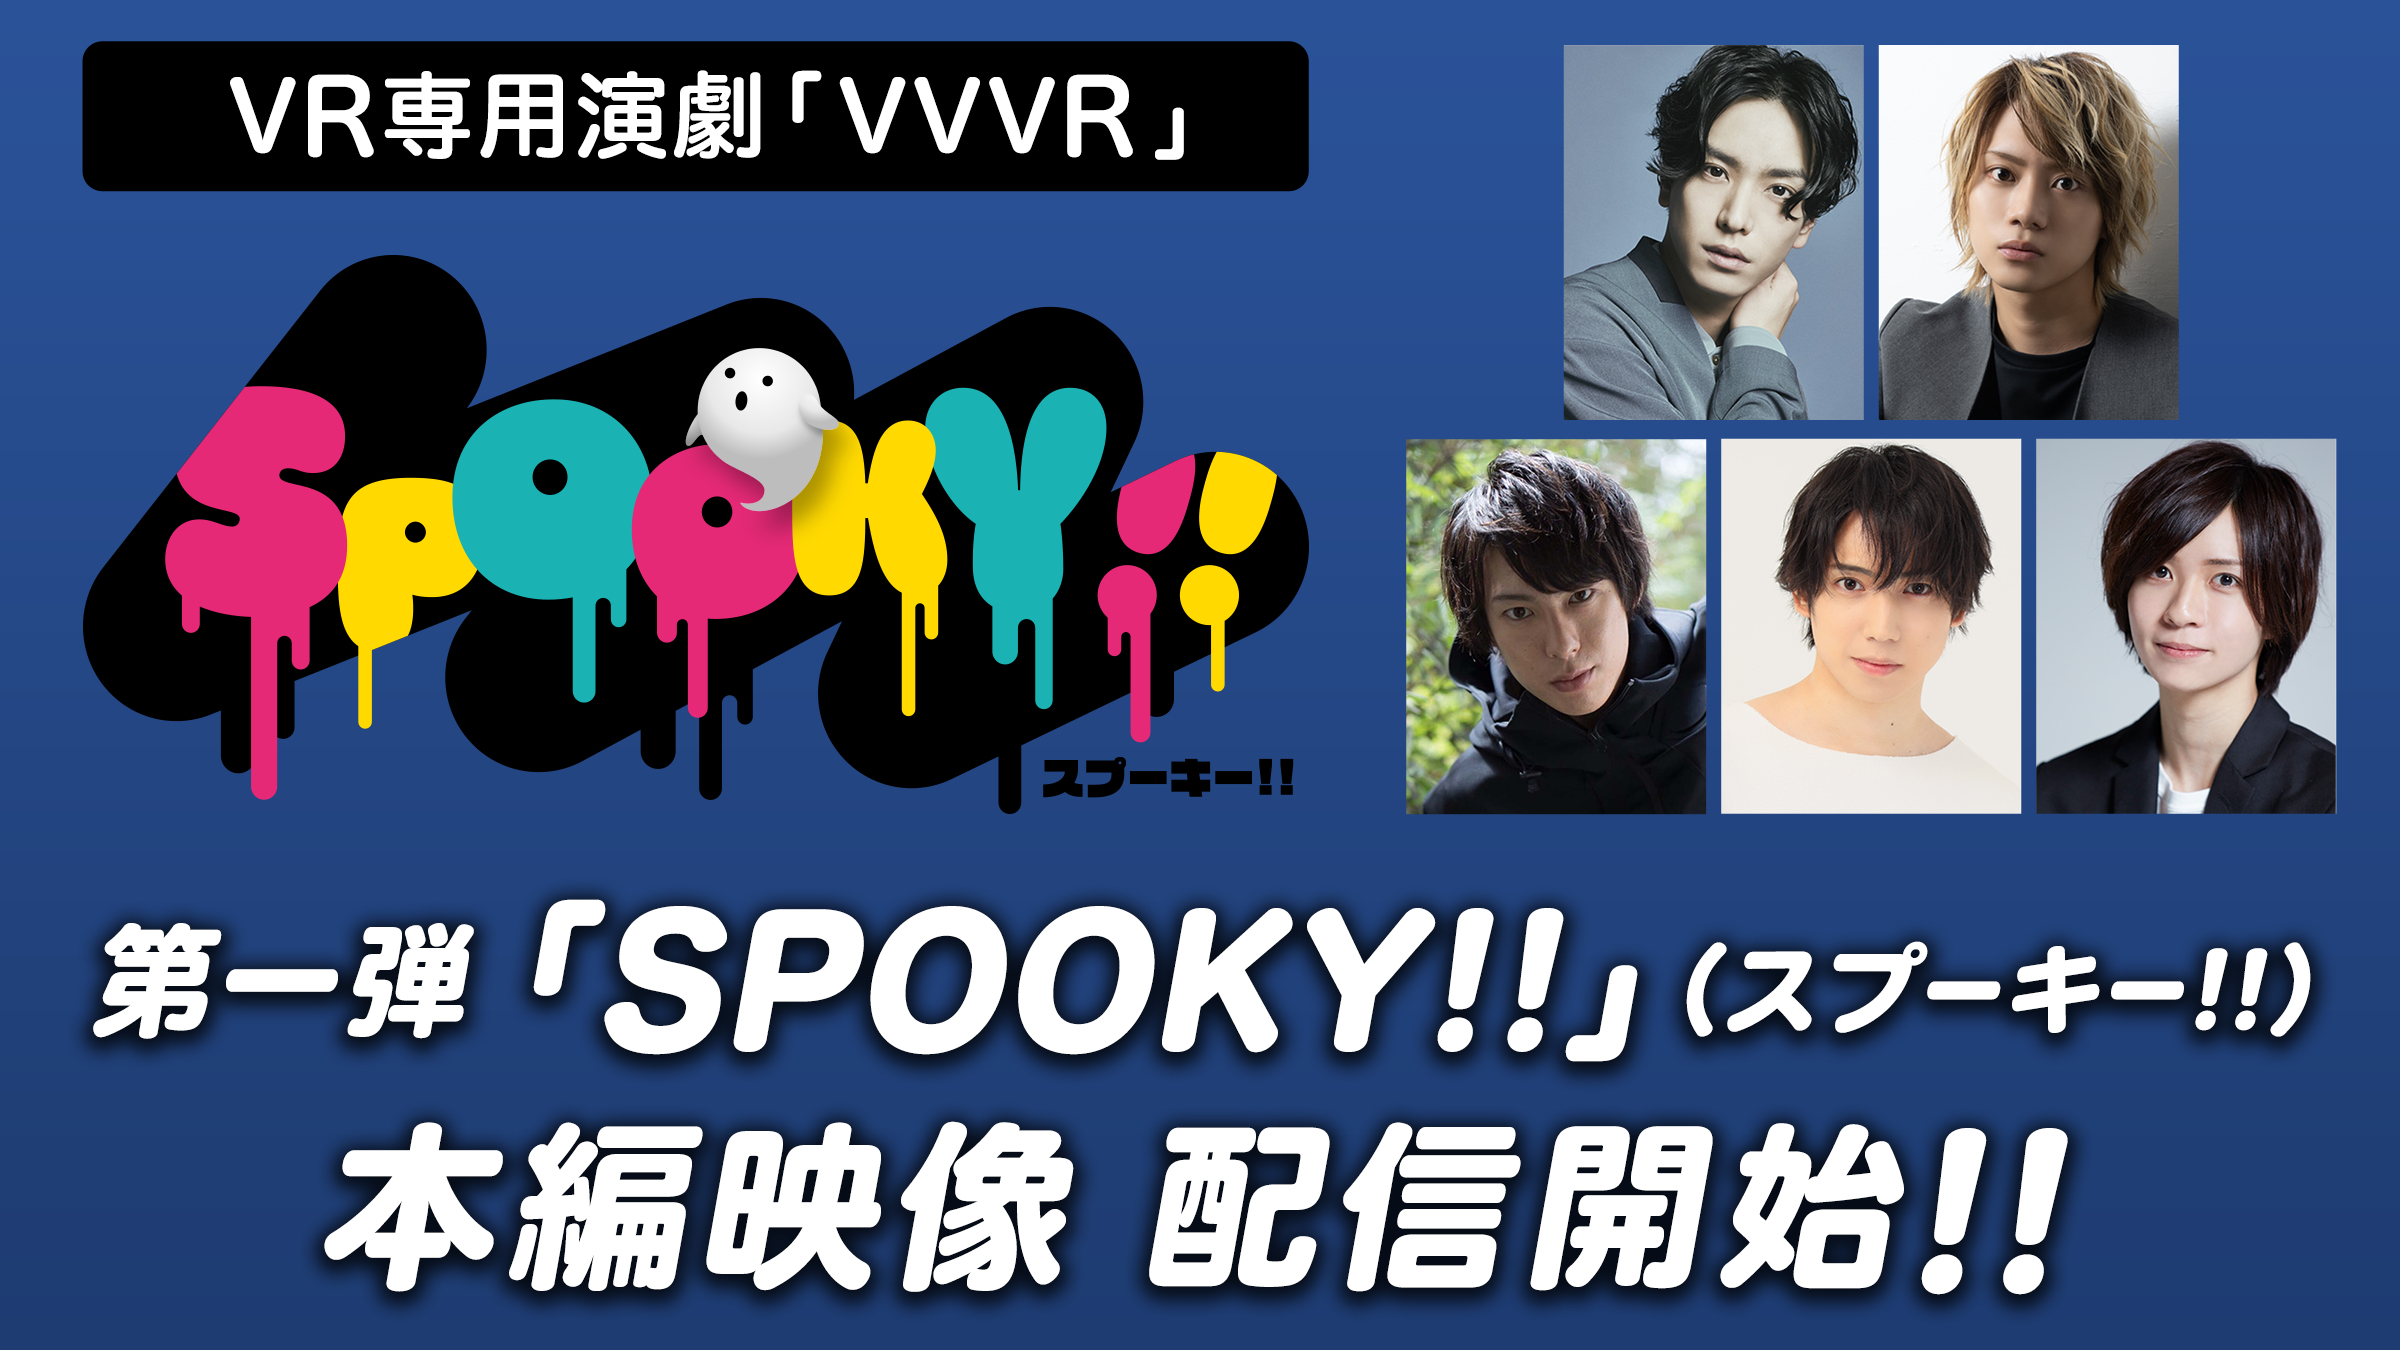 SPOOKY!! VR専用演劇 VVVR